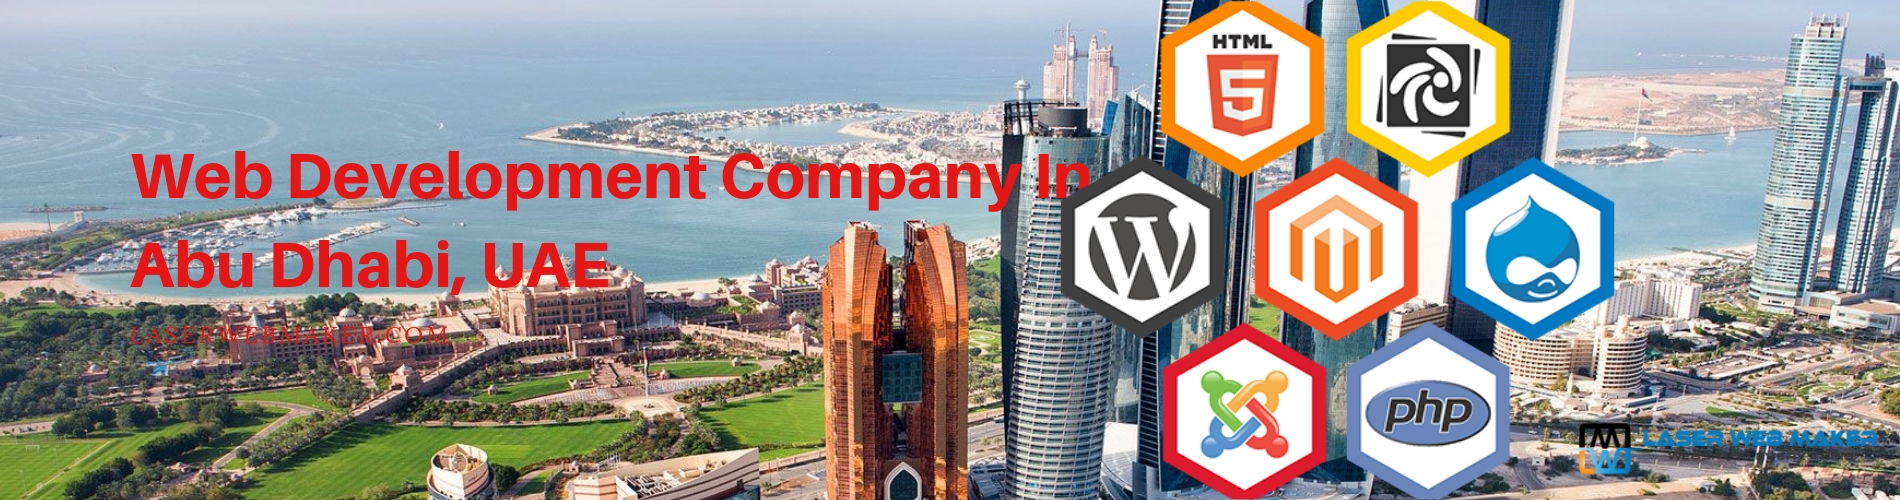 web development company in abu dhabi UAE